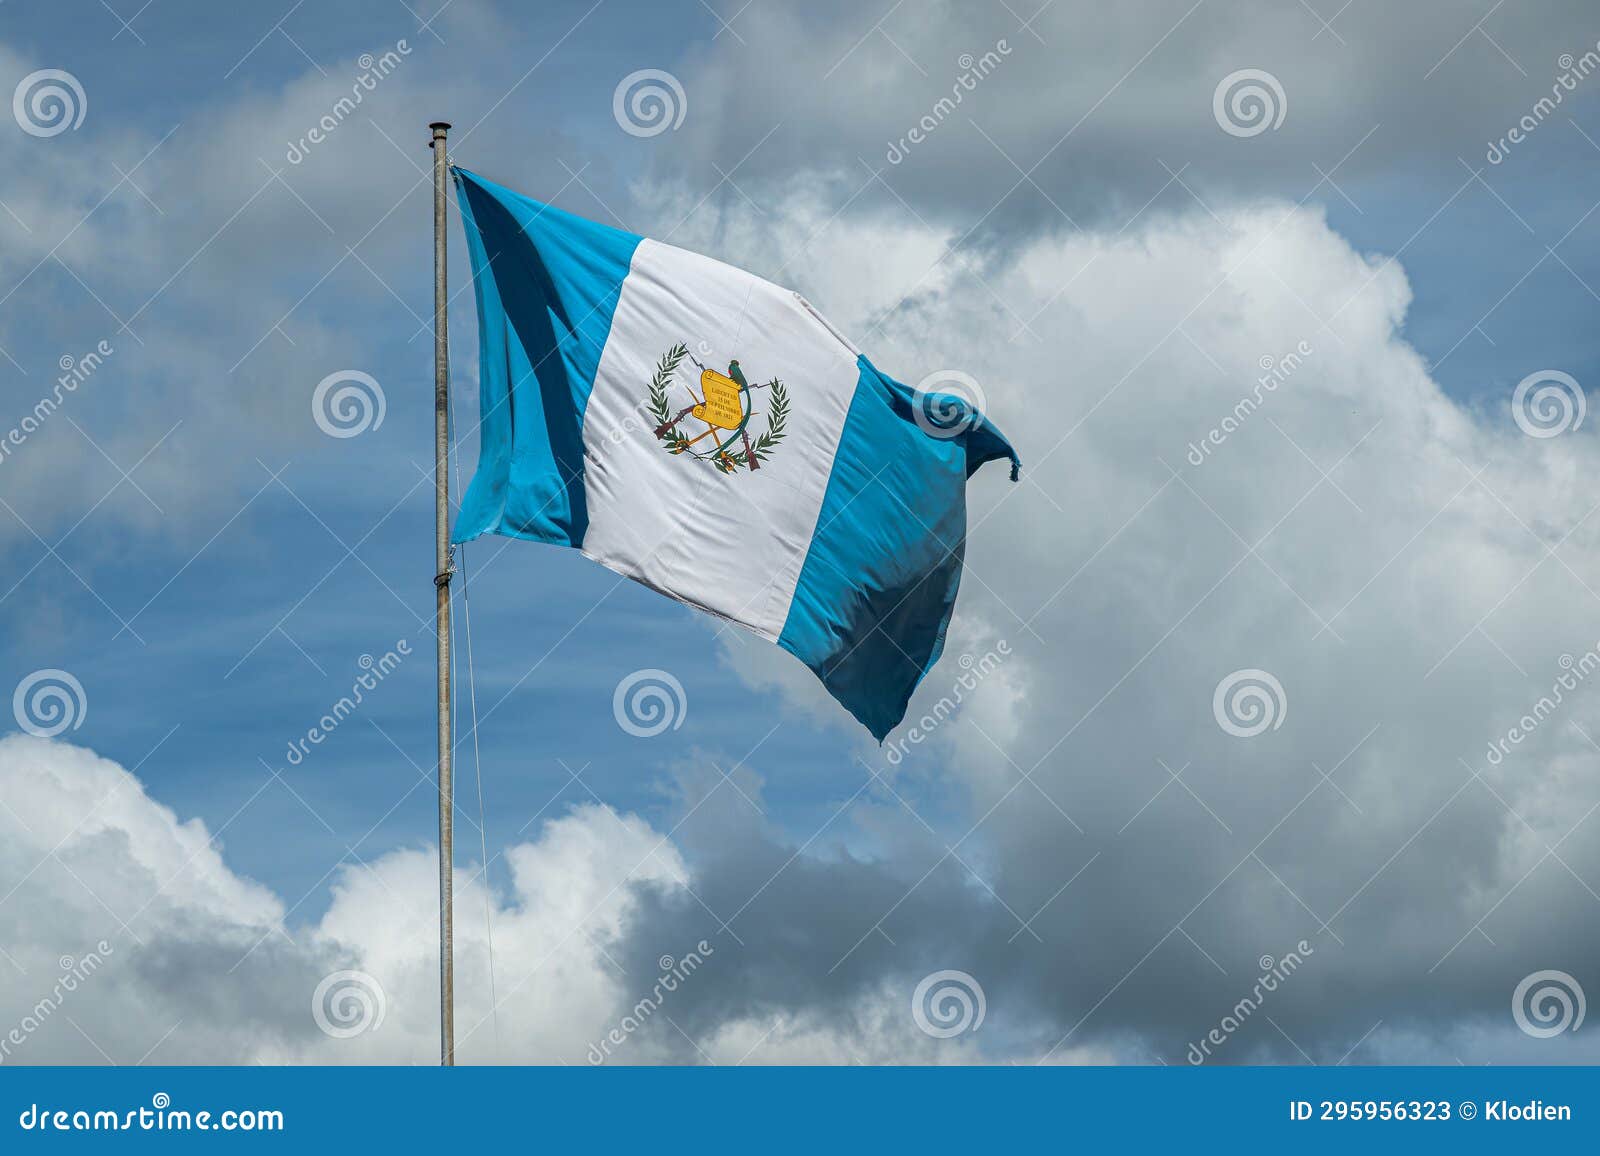 closeup of national flag waving in wind, la antigua, guatemala